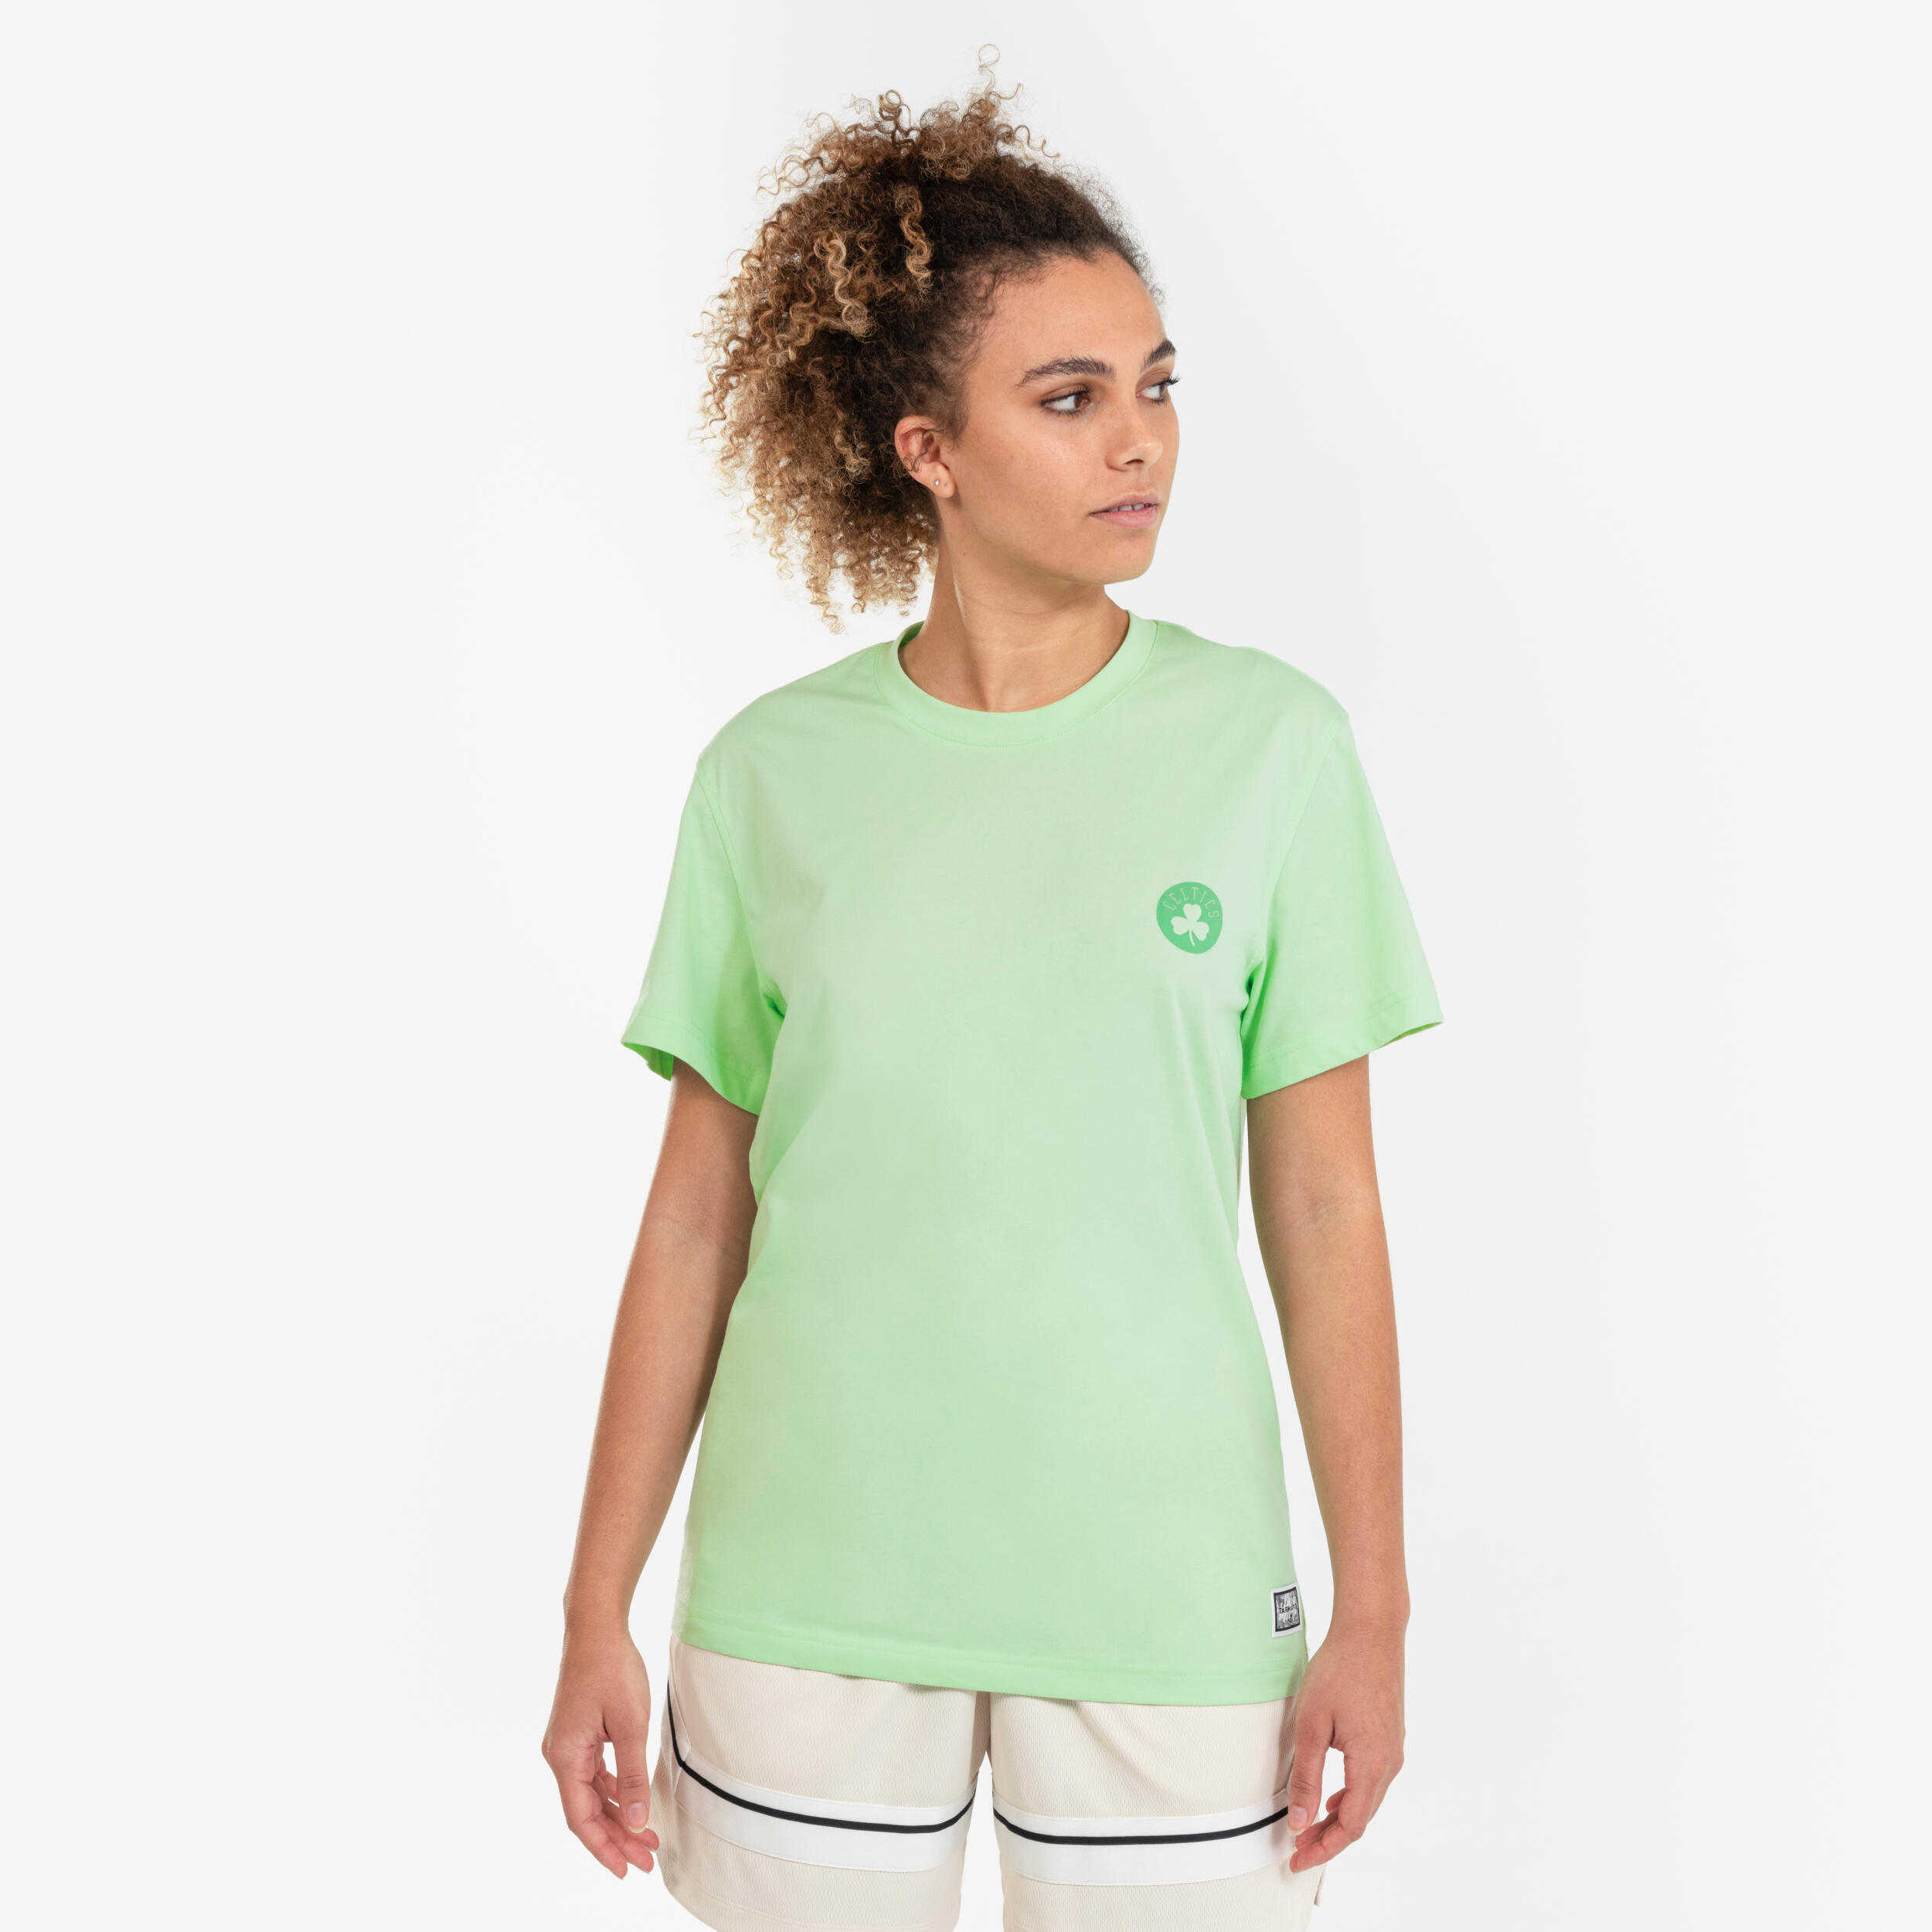 Unisex Basketball T-Shirt 900 AD - NBA Celtics/Green 4/8